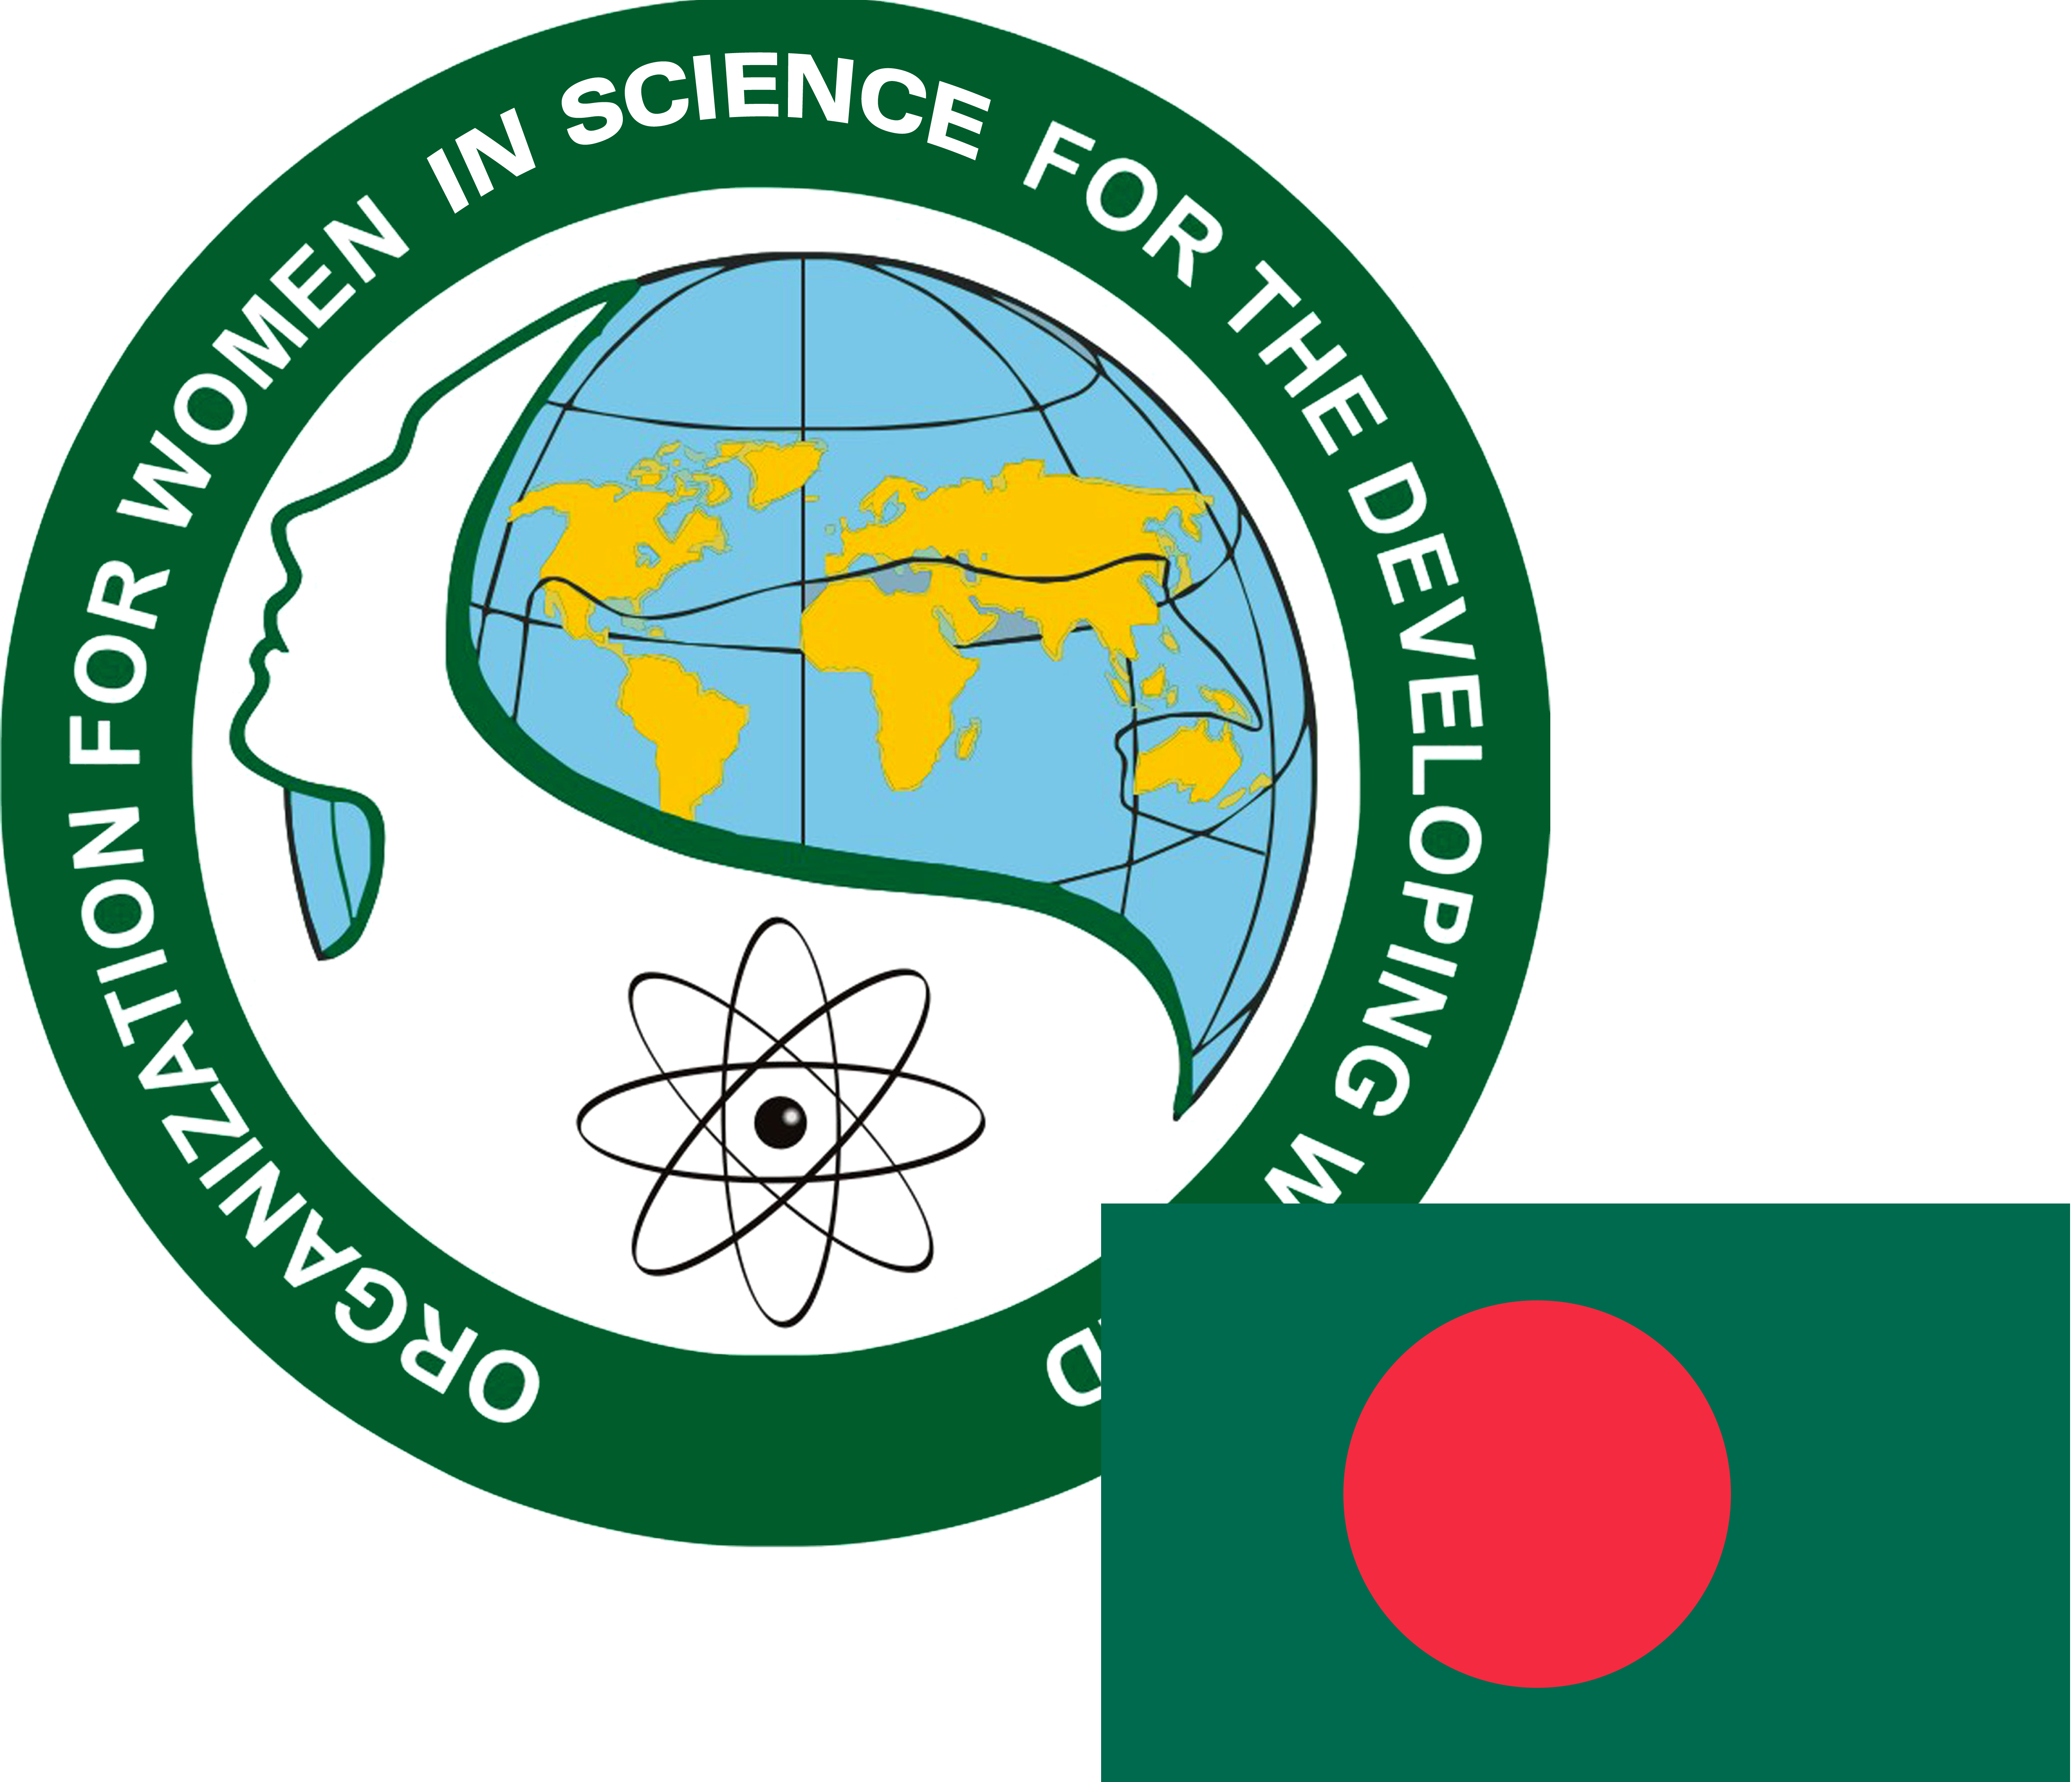 OWSD Nepal logo